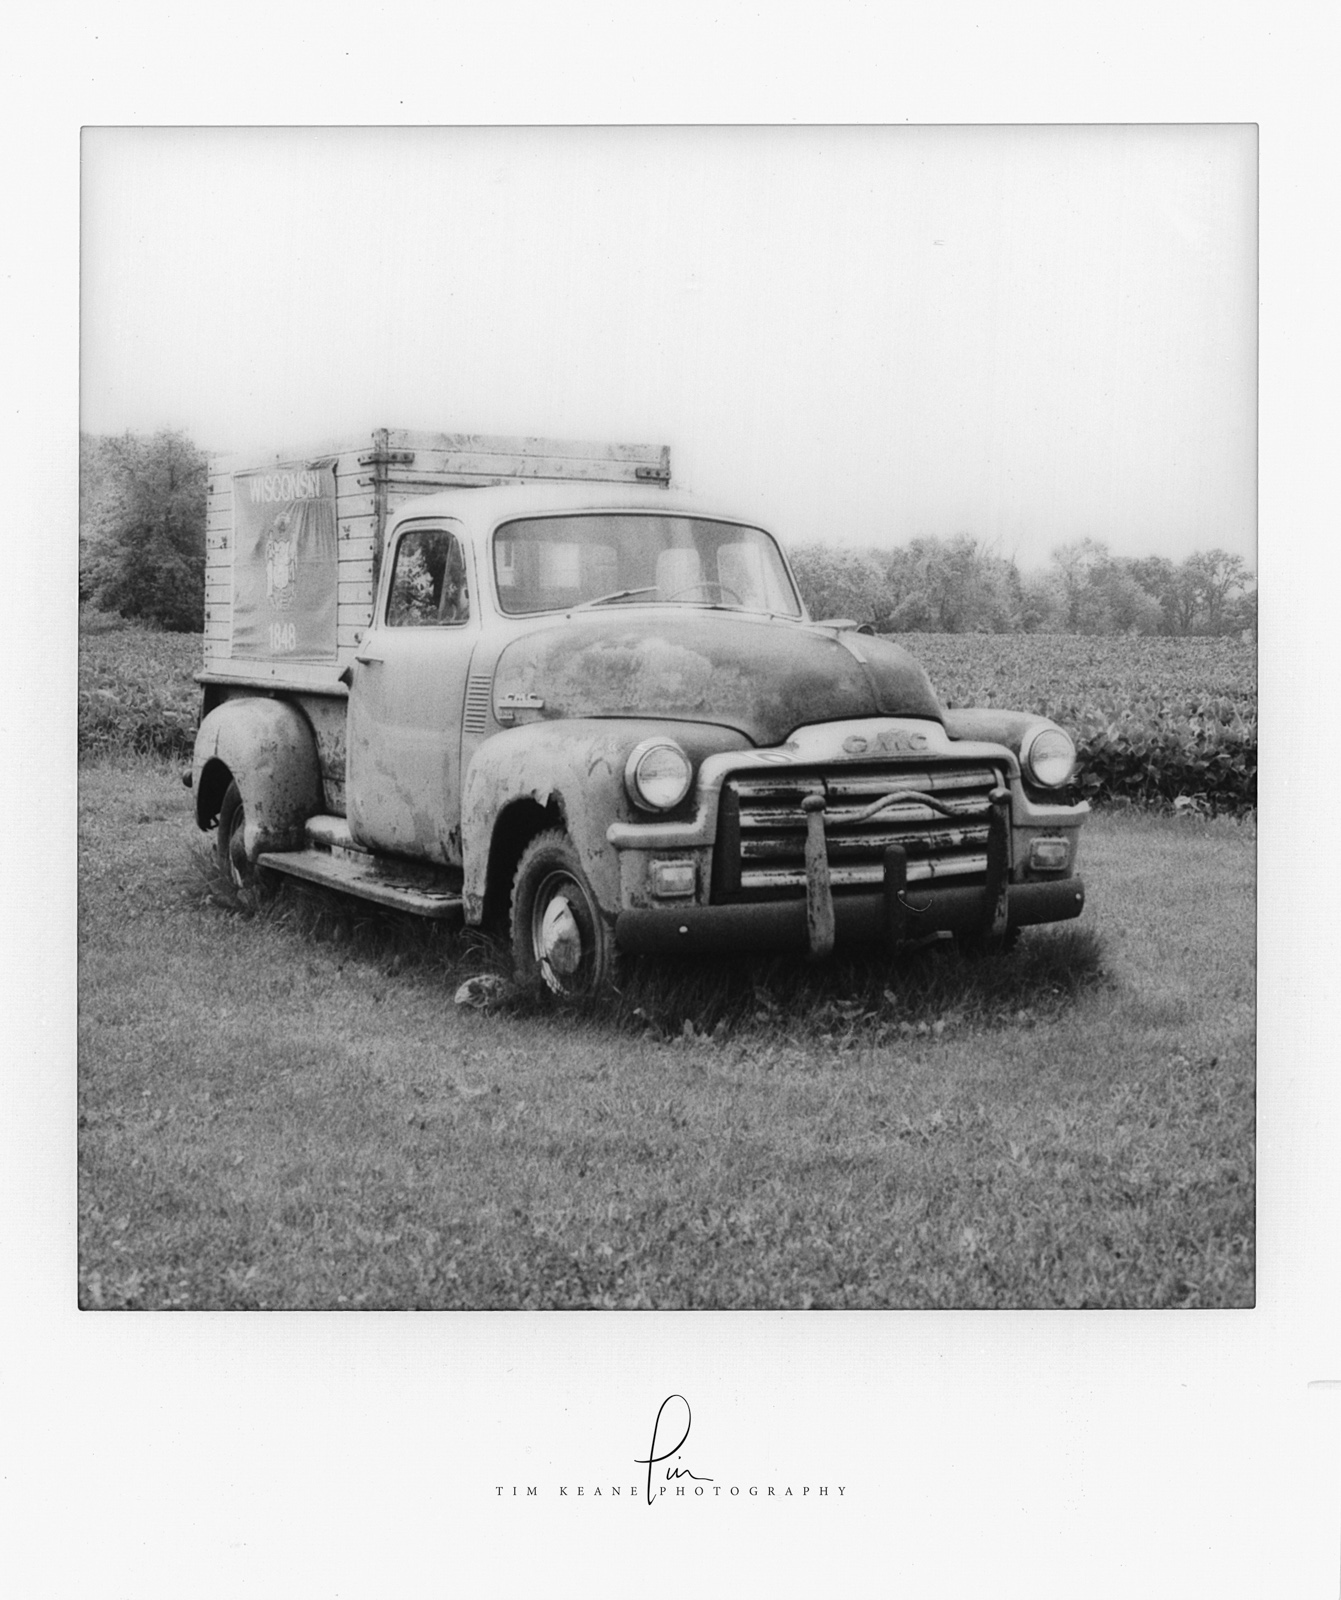 fuji film, old truck, han chen, black and white, wisconsin, polaroid 